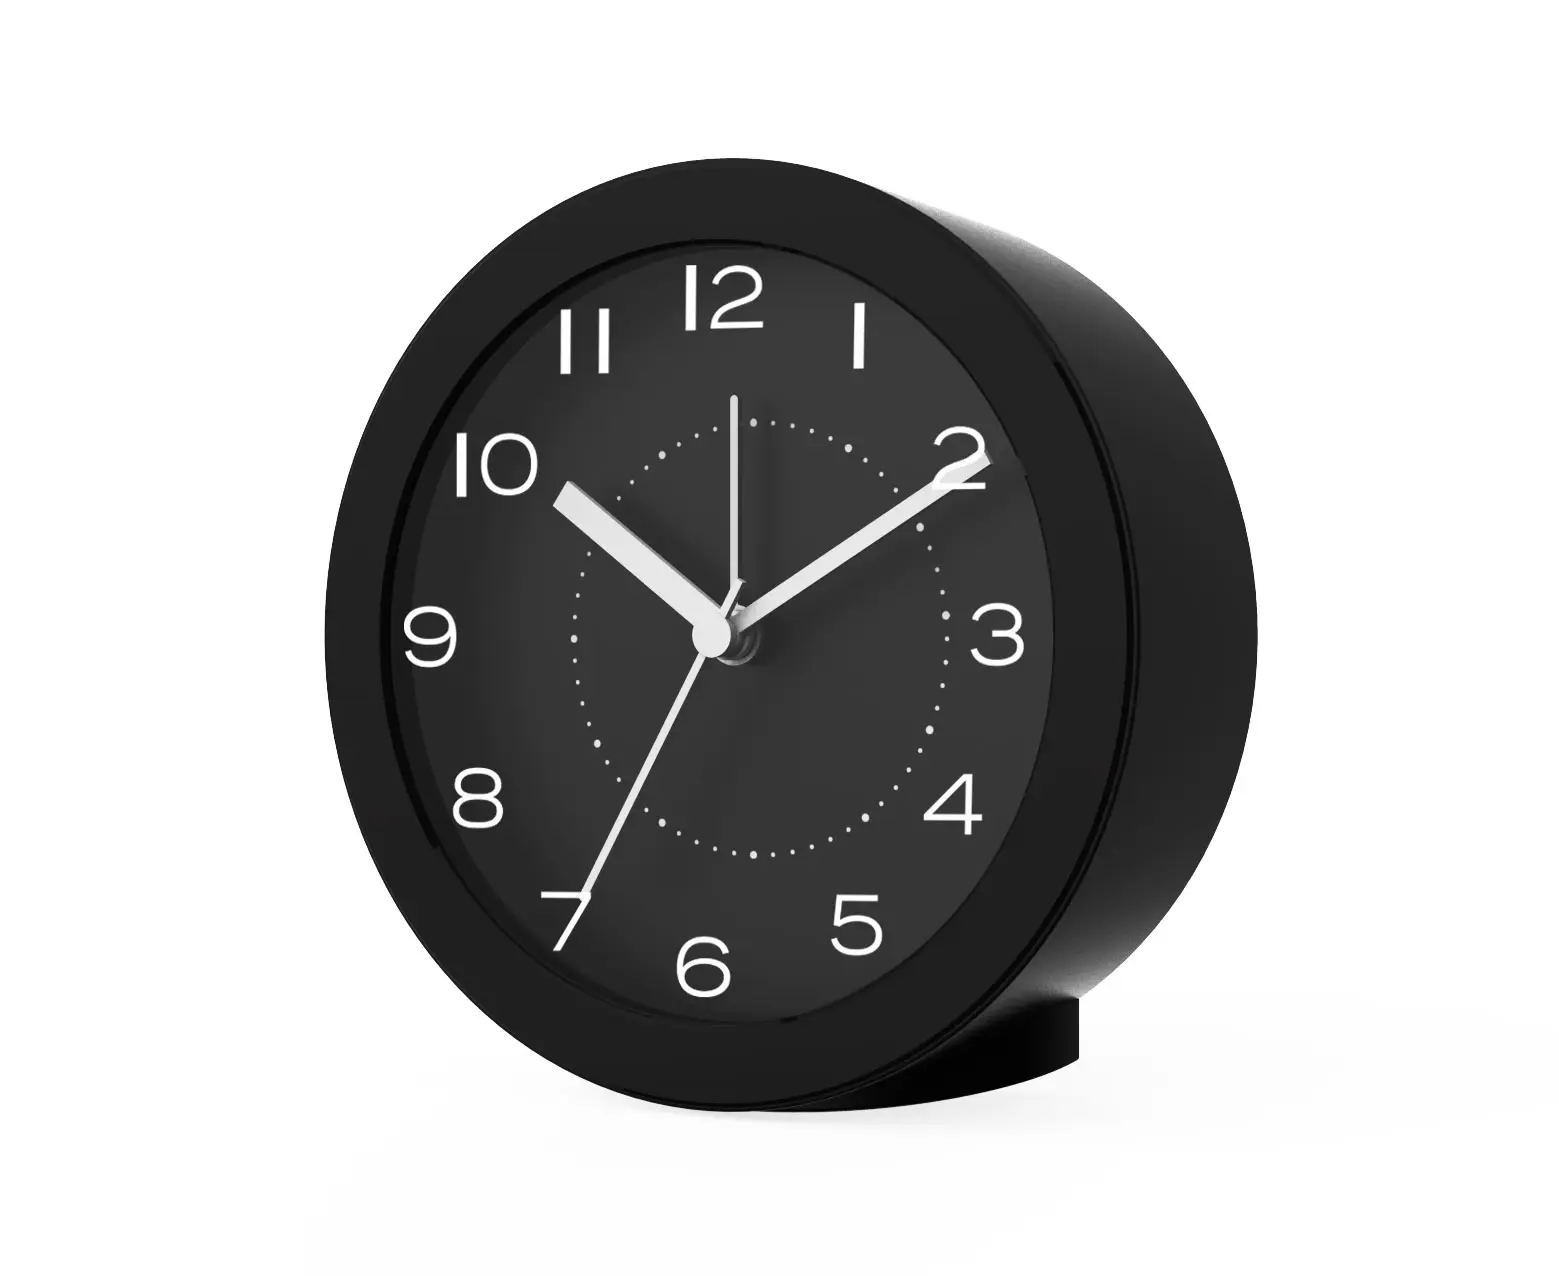 Alarm Clock Quartz Time Snooze Backlight Classic Round Desktop Table Bedside Clocks Home Office Decor Modern